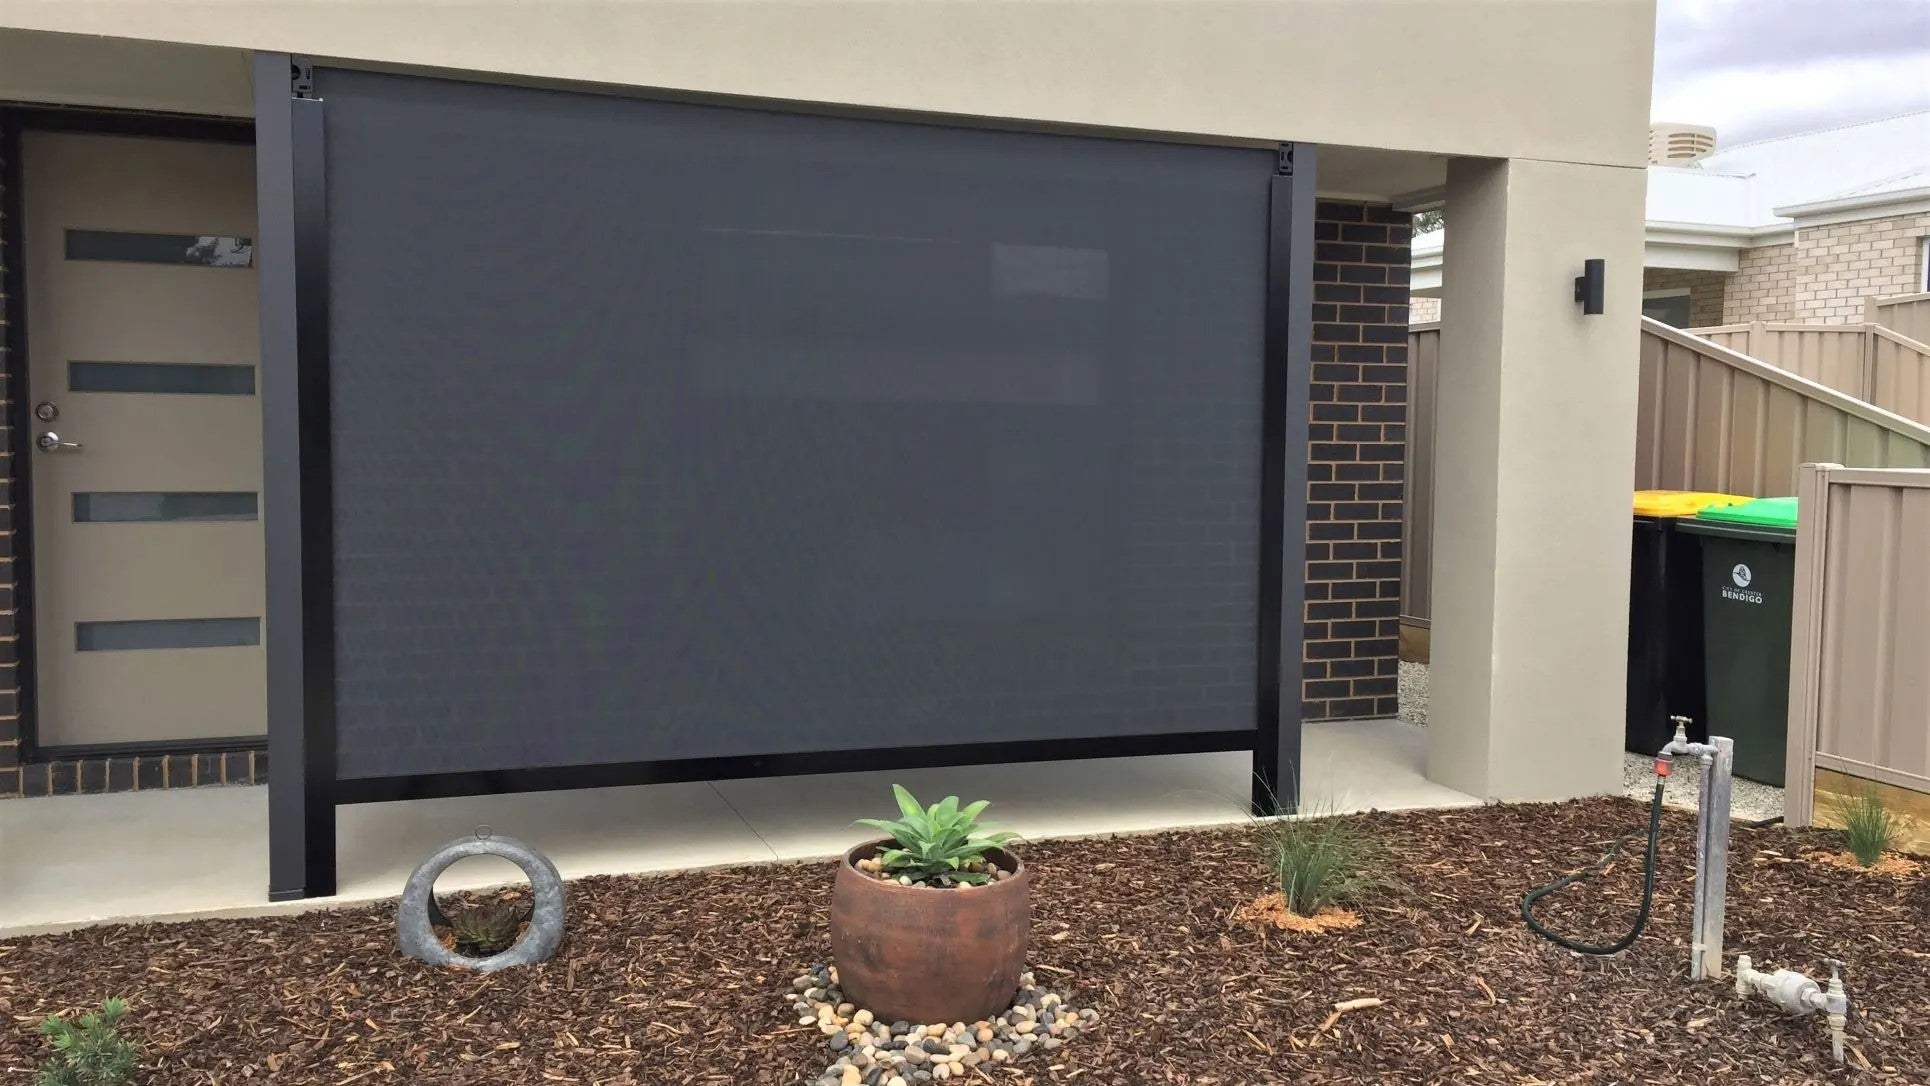 Alfresco blinds designed for outdoor comfort